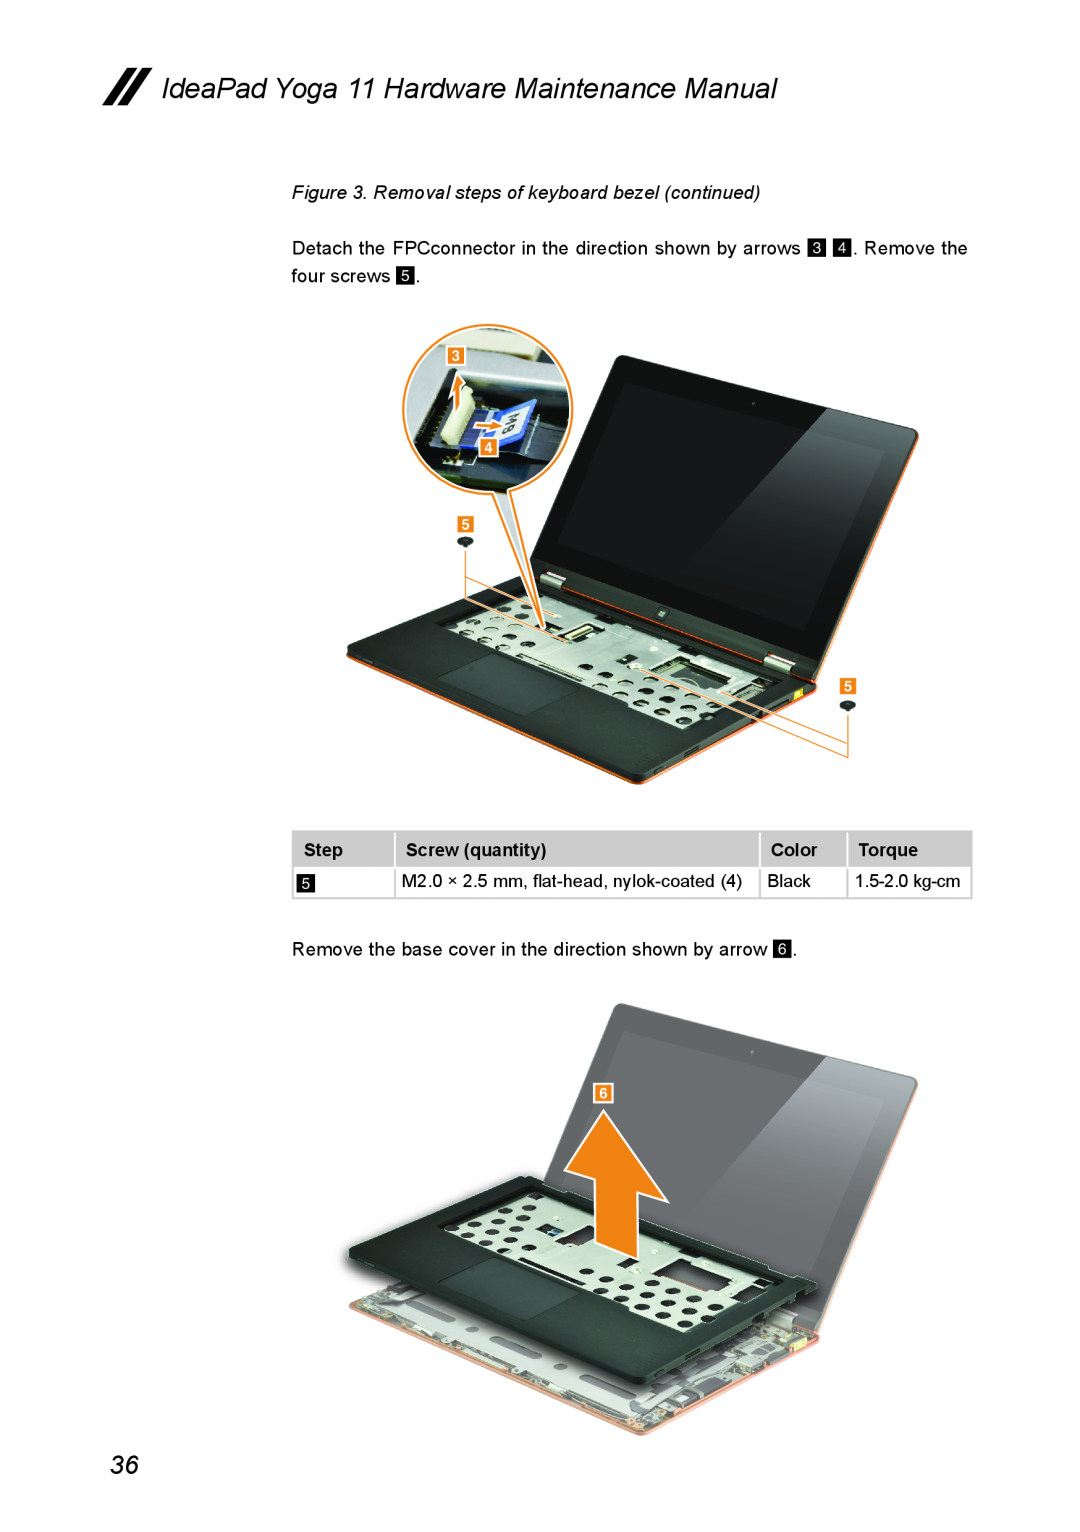 Lenovo Removal steps of keyboard bezel continued, IdeaPad Yoga 11 Hardware Maintenance Manual, Step, Screw quantity 